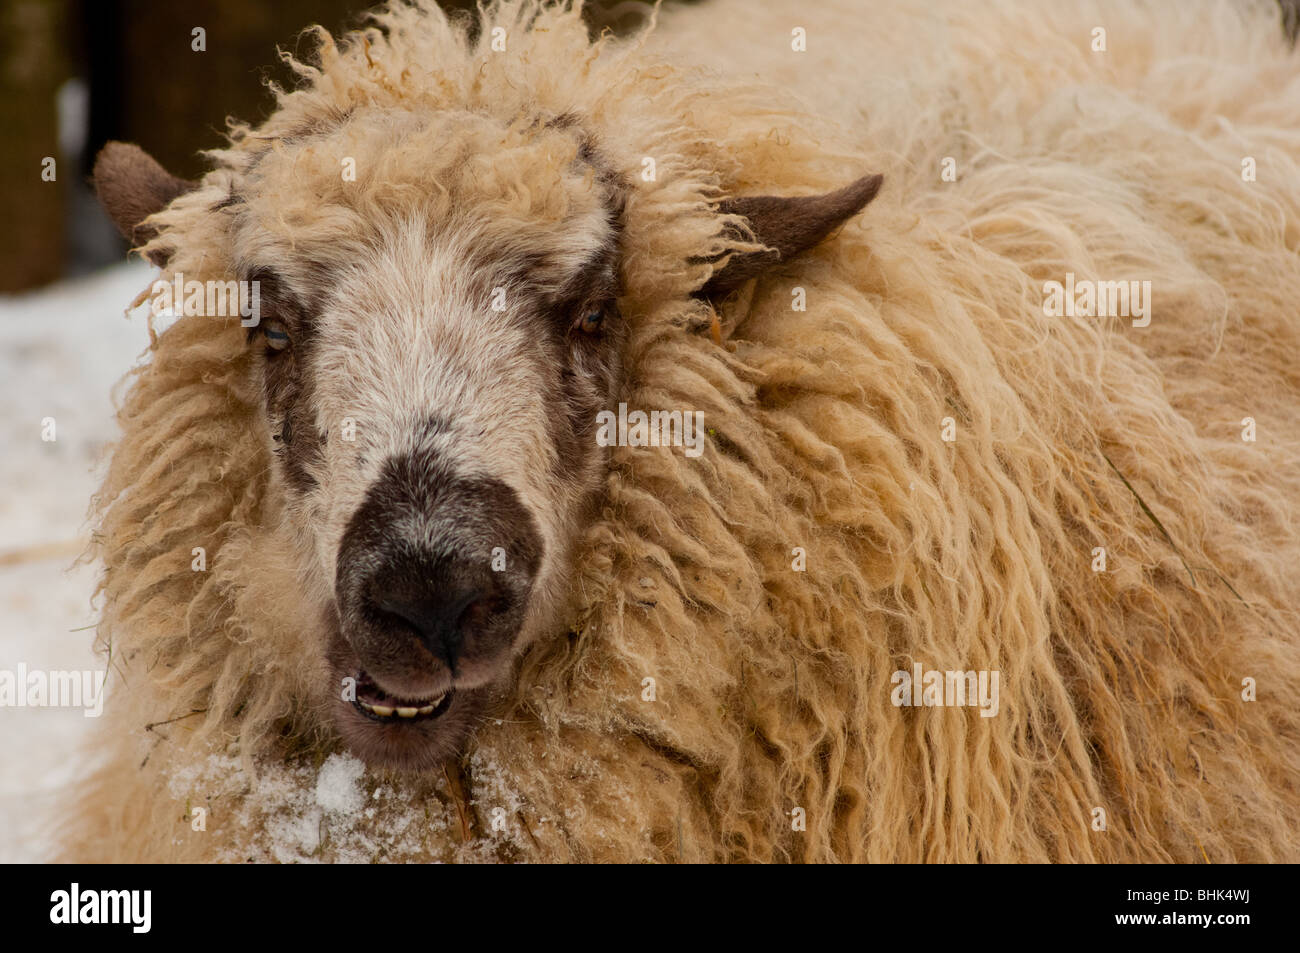 Big woolly sheep closeup Stock Photo